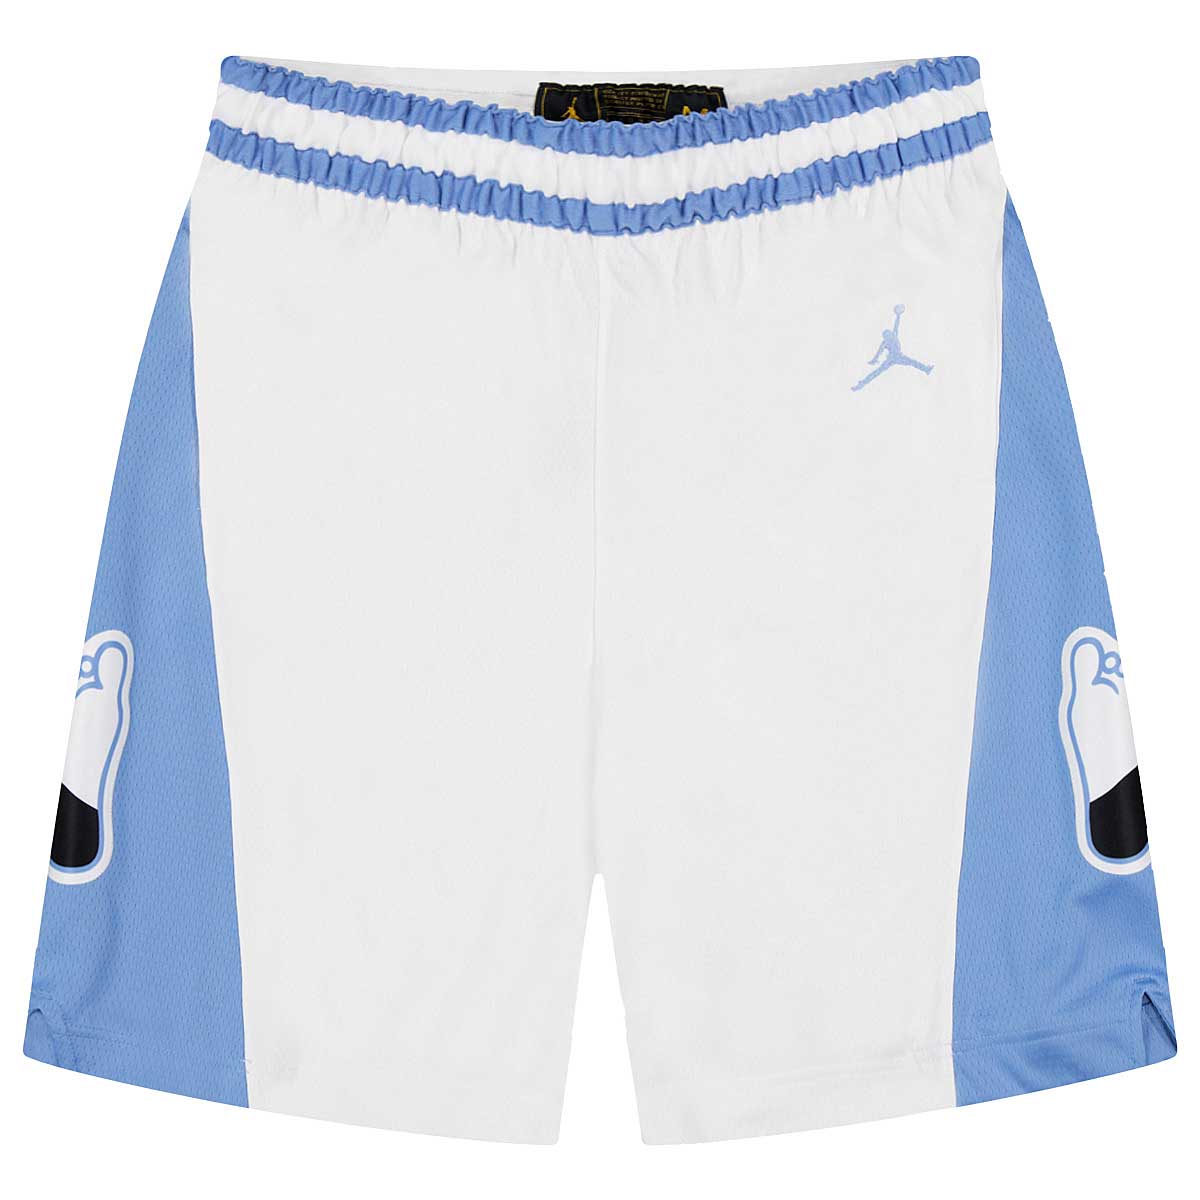 Jordan Ncaa North Carolina Tarheels Retro Limited Edition Shorts, Weiß/valor Blau/valor Blau M